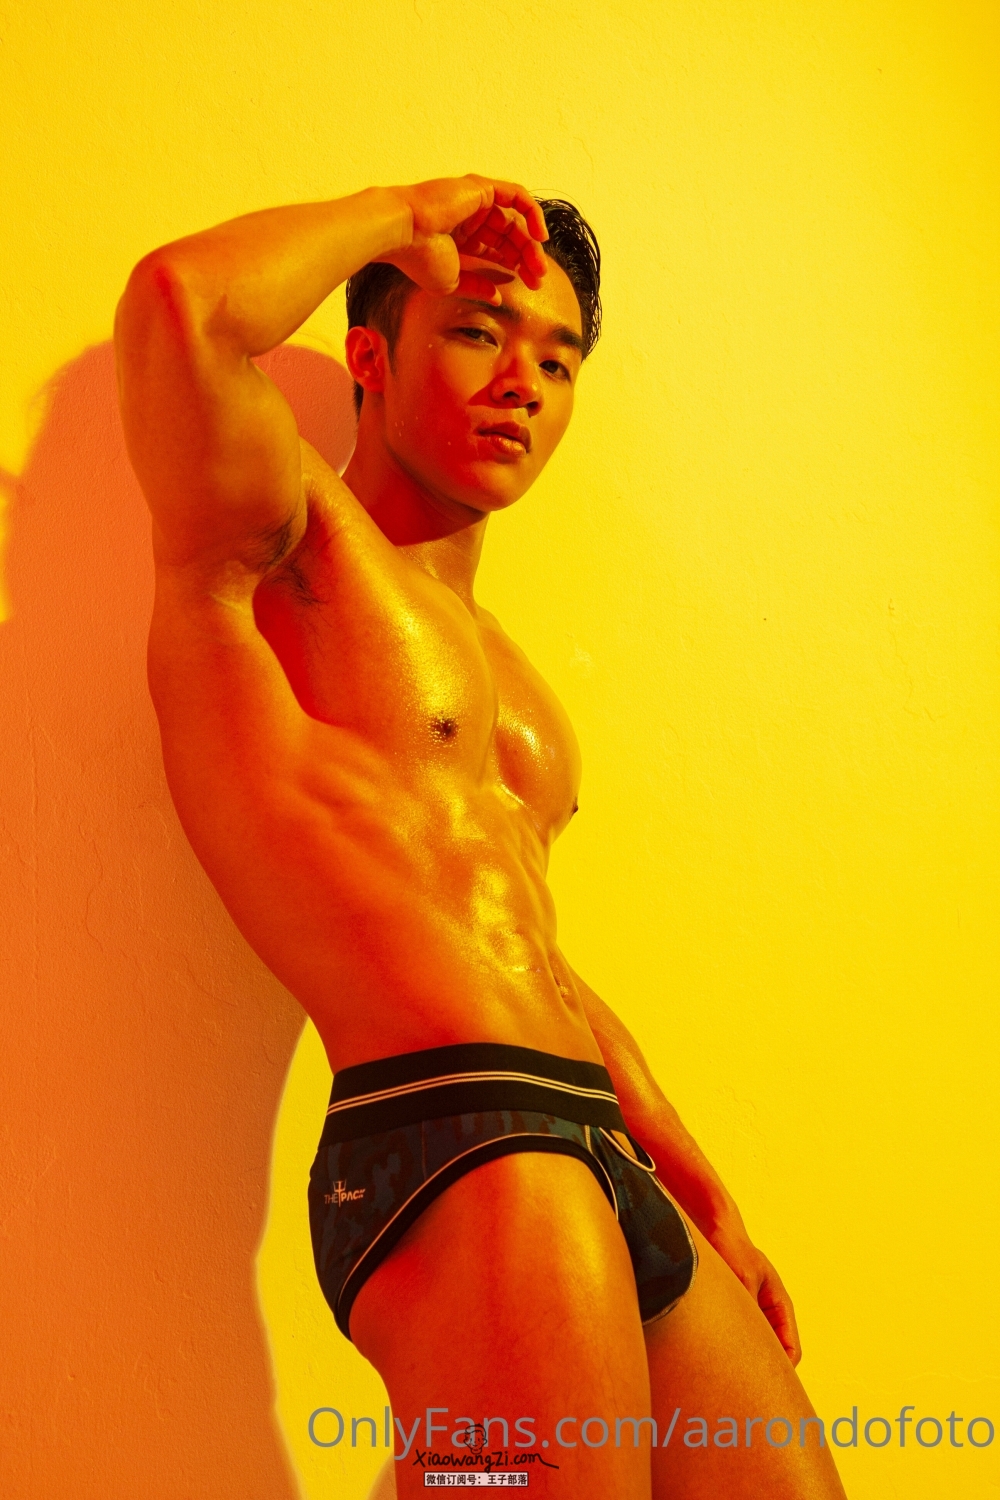 亚洲美男子集 | Aaron Do collection 极品肌肉男模大串烧+ 巨型肌肉巨獸 Anthony 欲望写真169P！VIP见完整